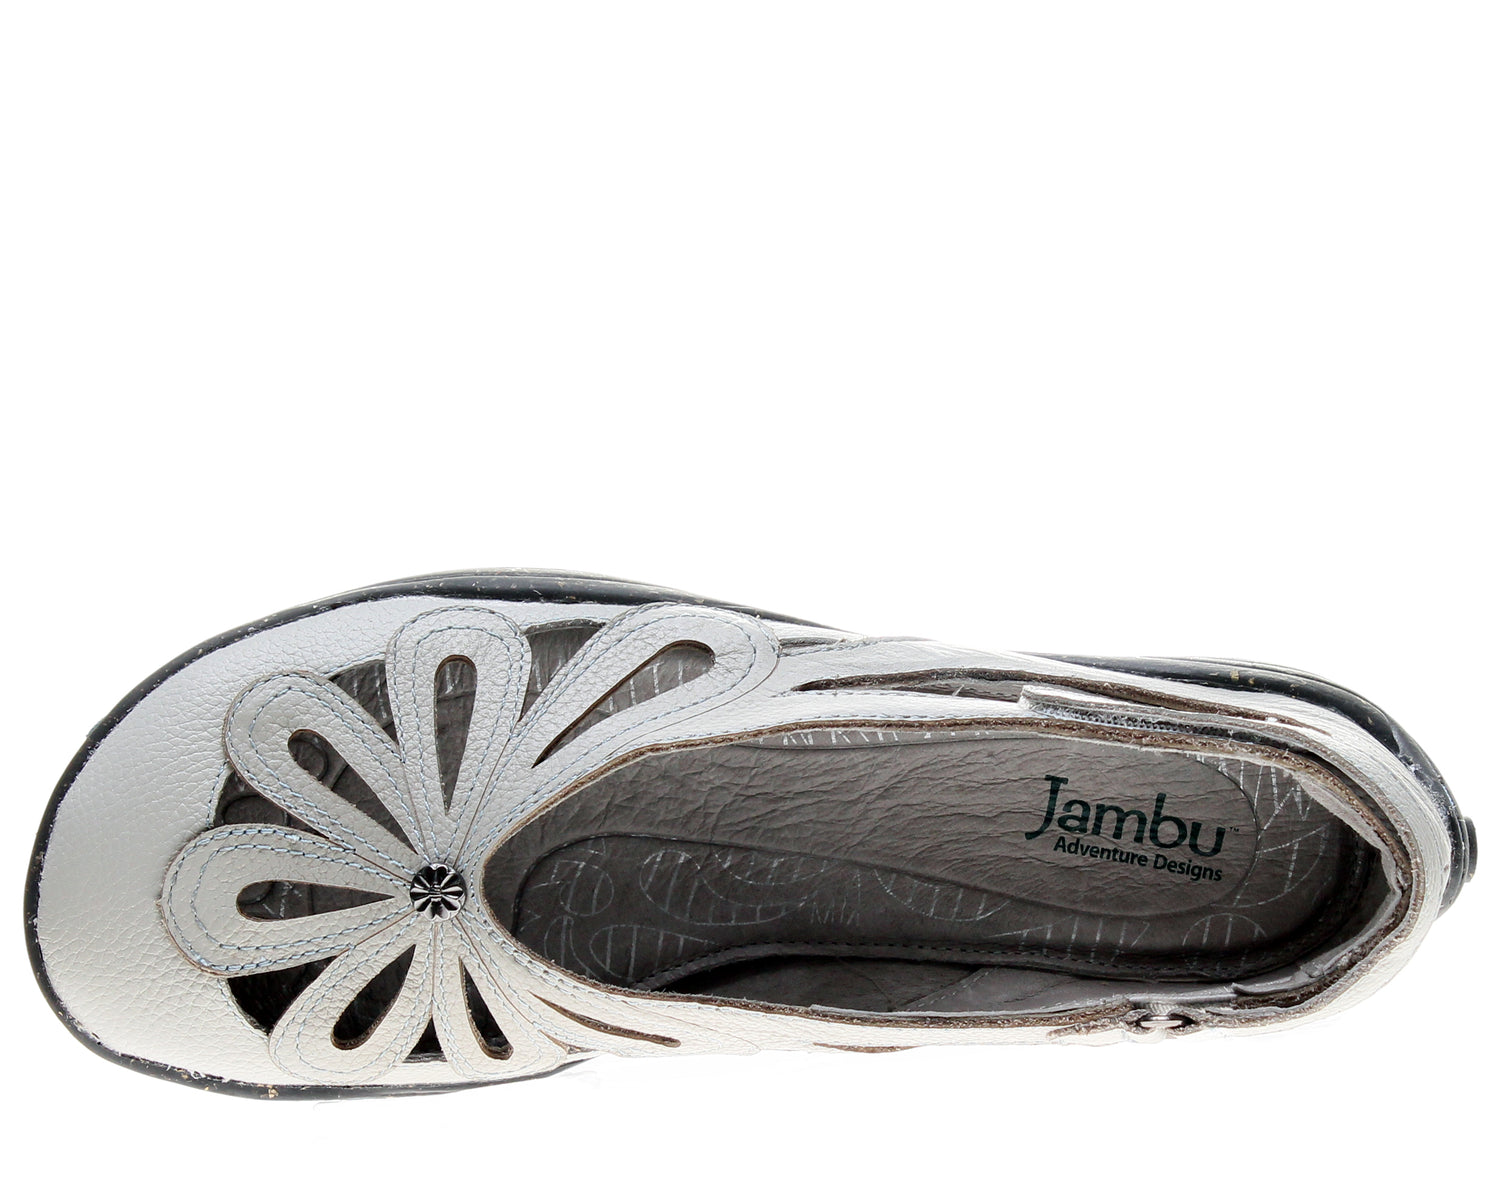 Jambu Blush Barefoot Ballet Flat Women's Shoes